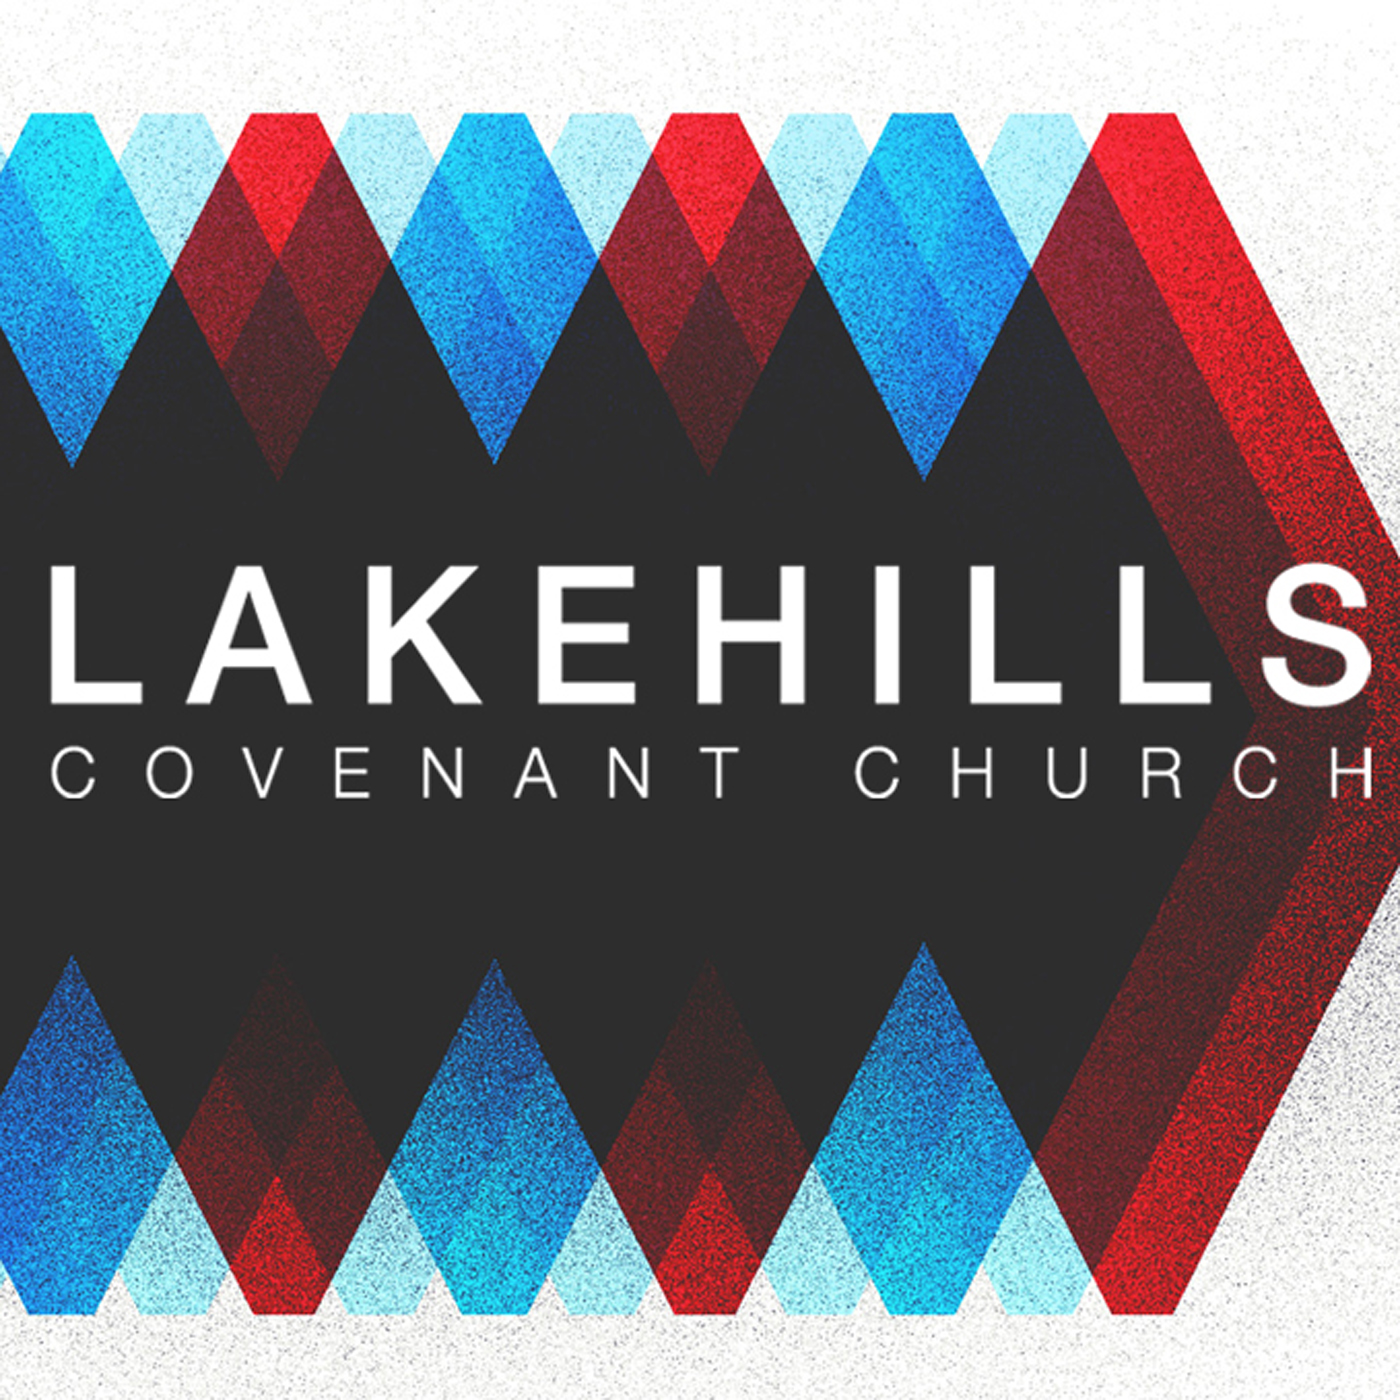 Lakehills Covenant Church